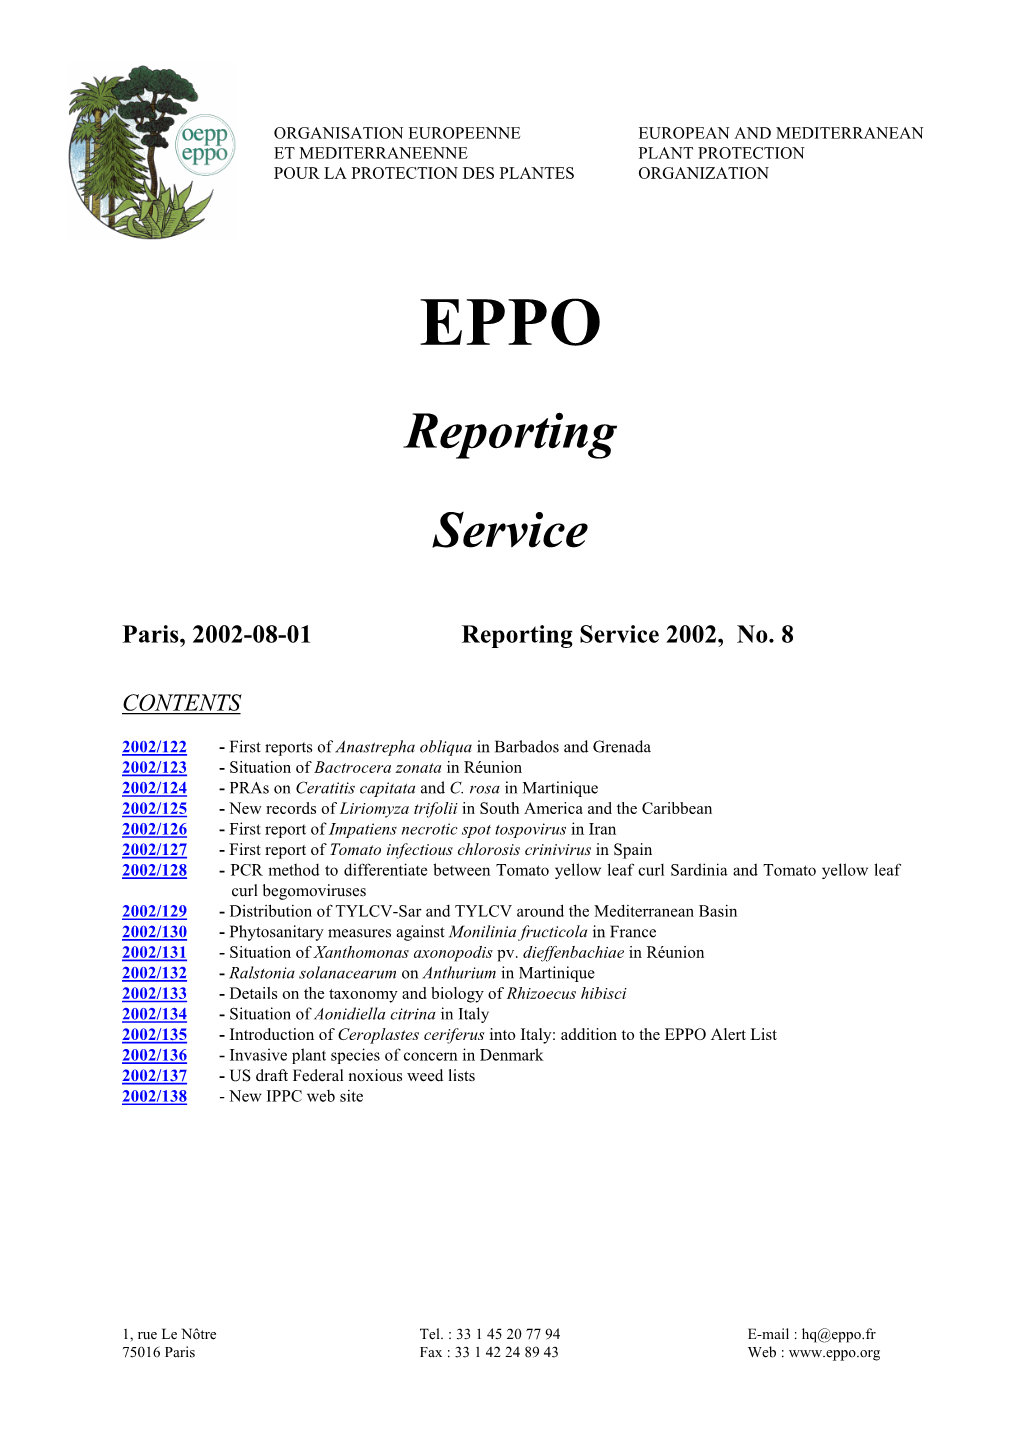 Reporting Service 2002, No